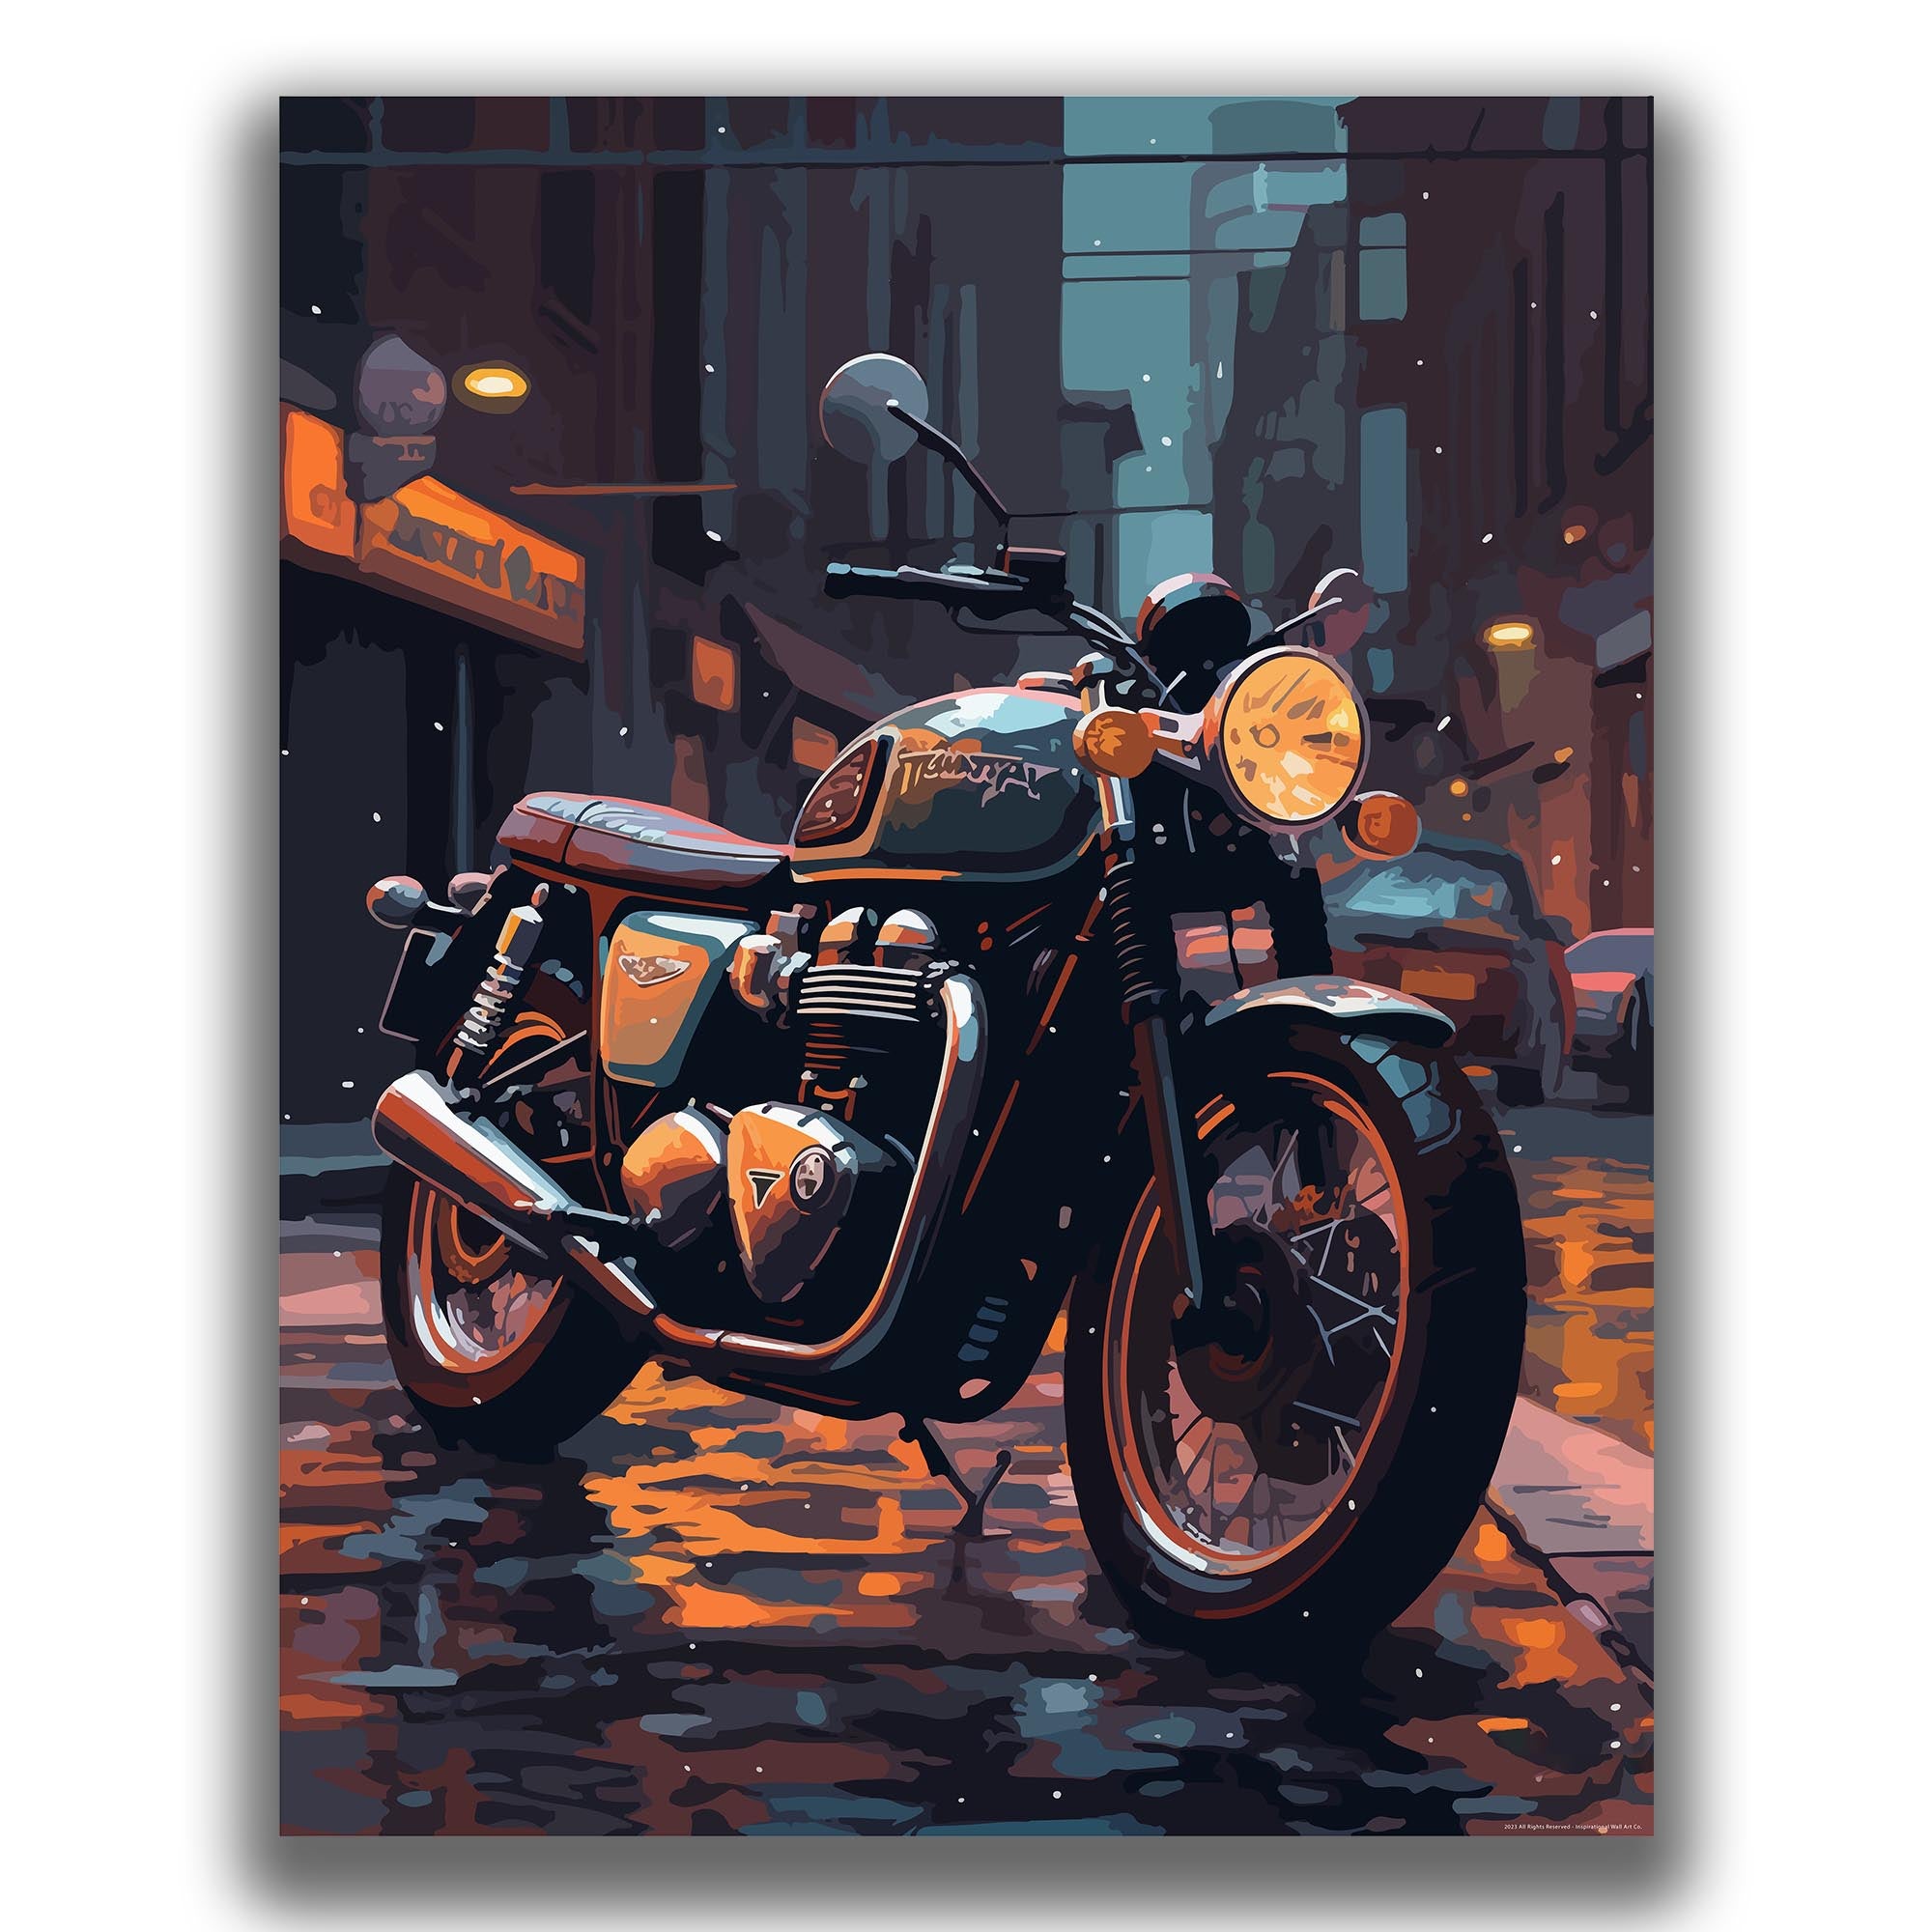 Fierce - Motorcycle Poster